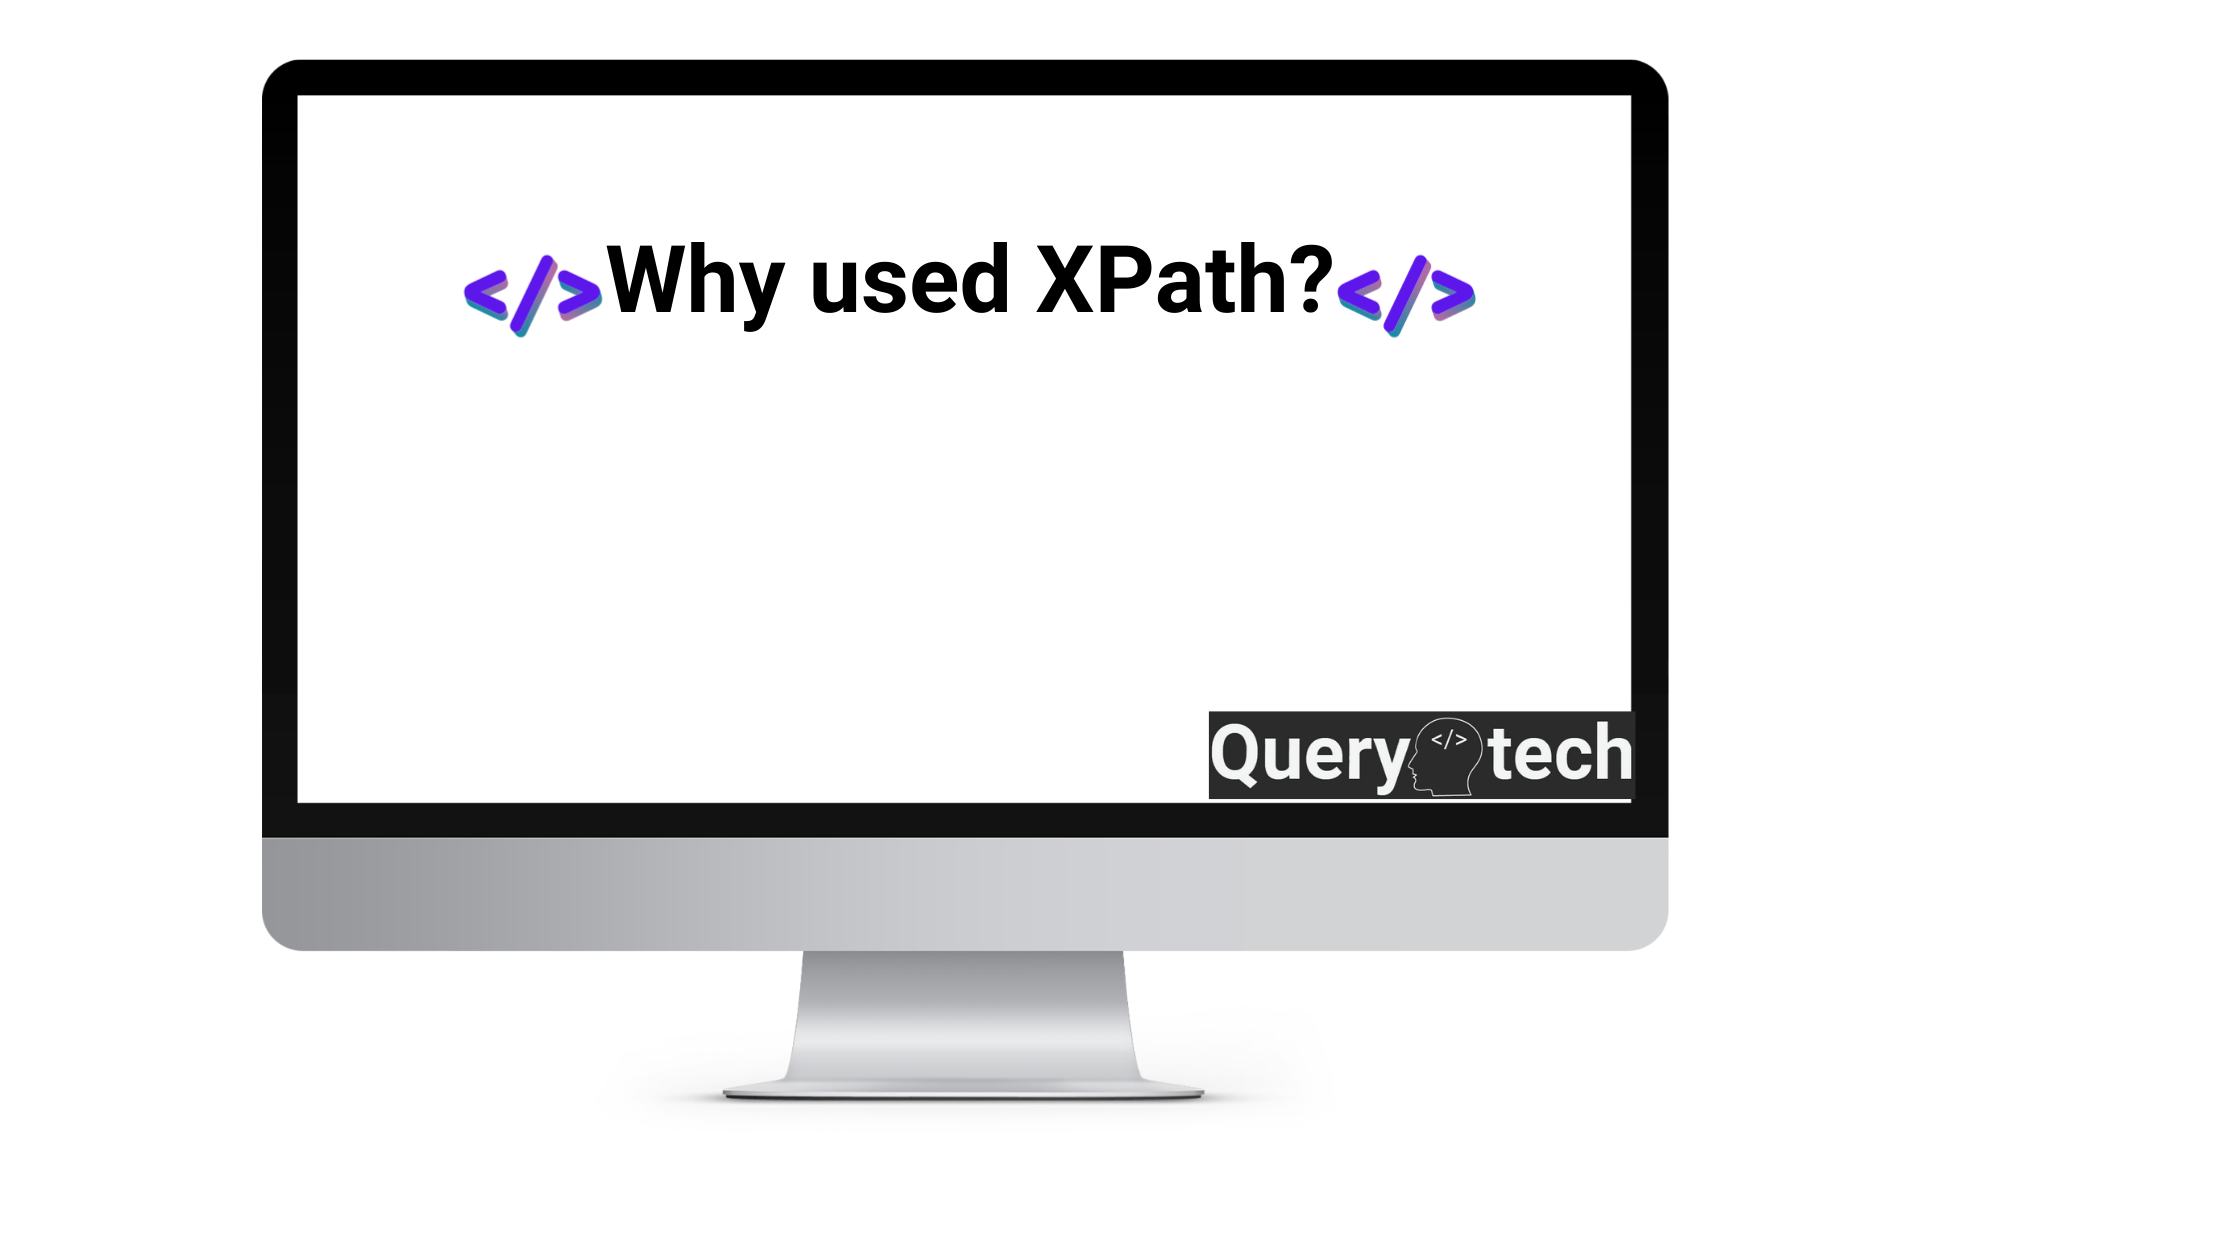 Why used xpath